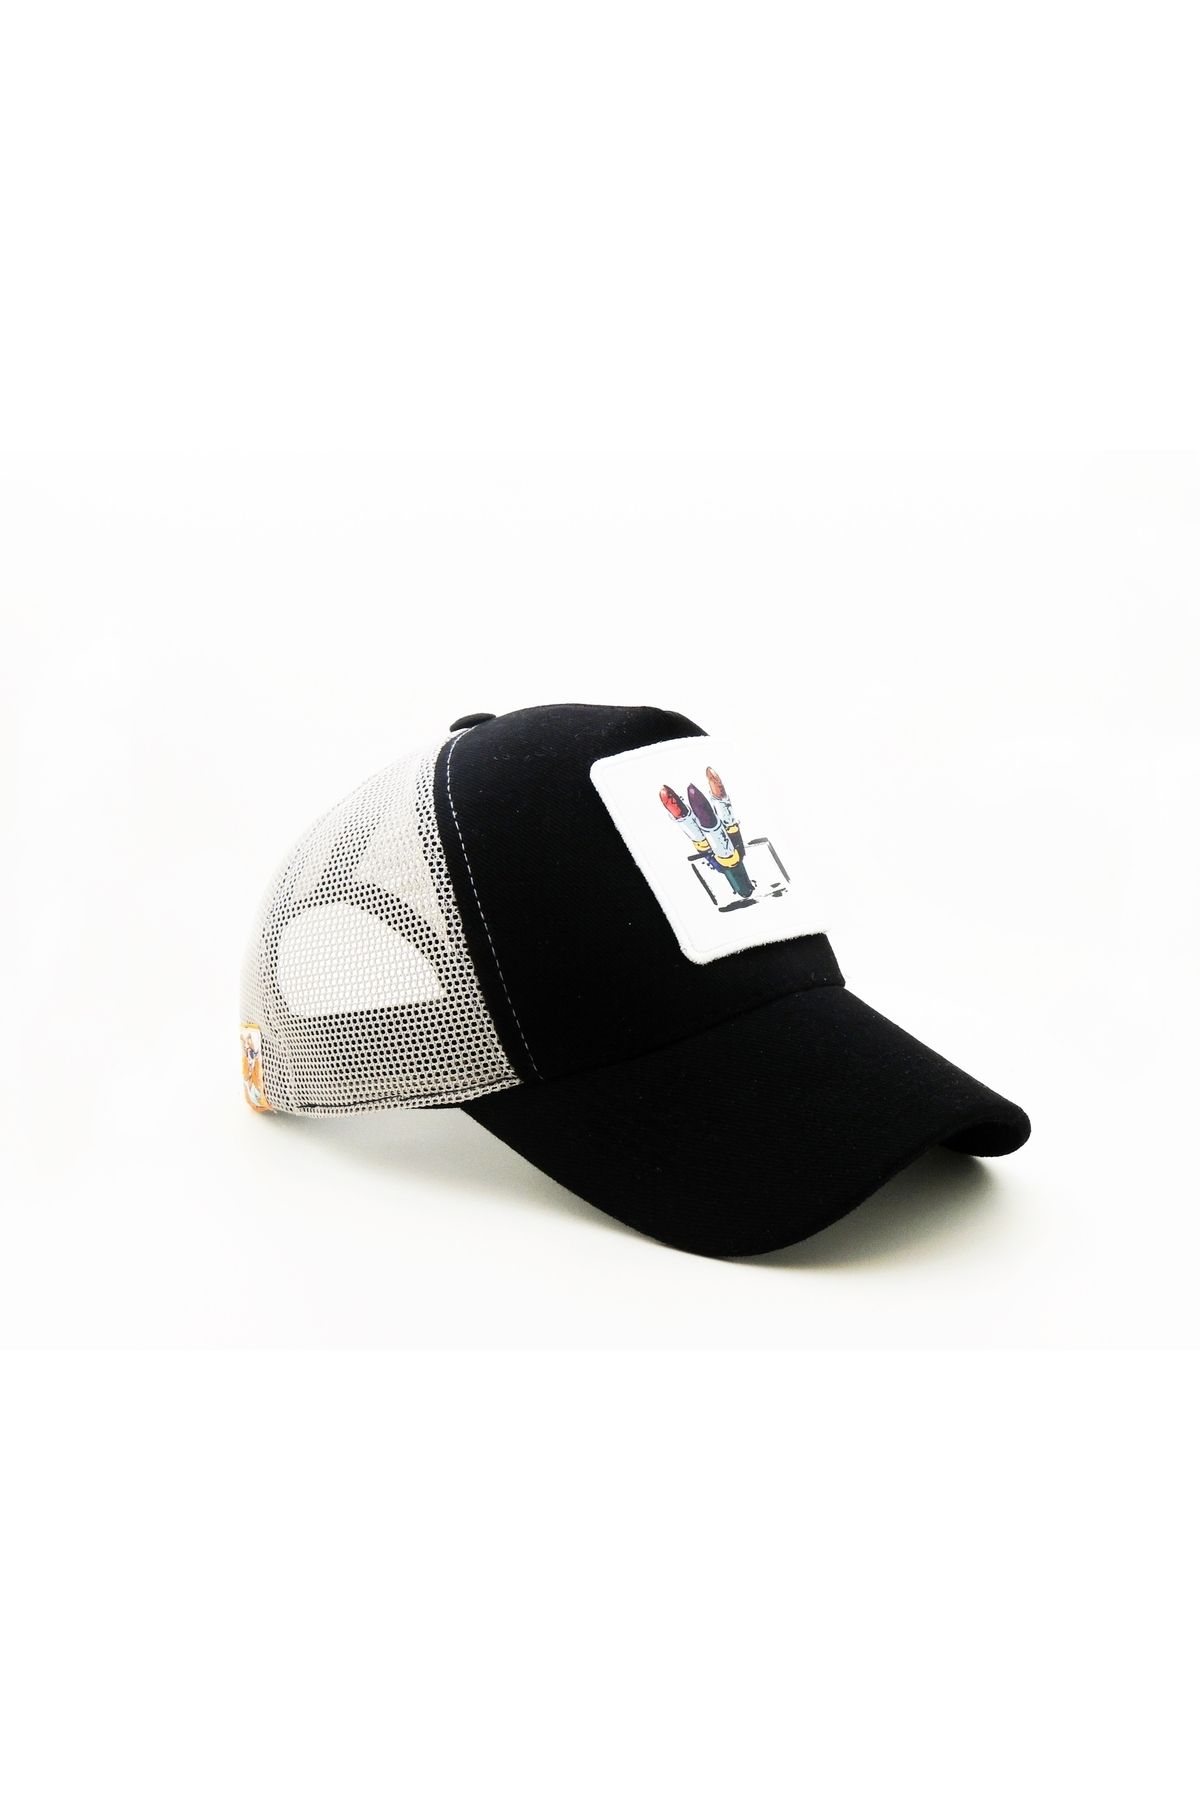 CityGoat Trucker Ruj-404 Kod Logolu Siyah-Beyaz Şapka (CAP)